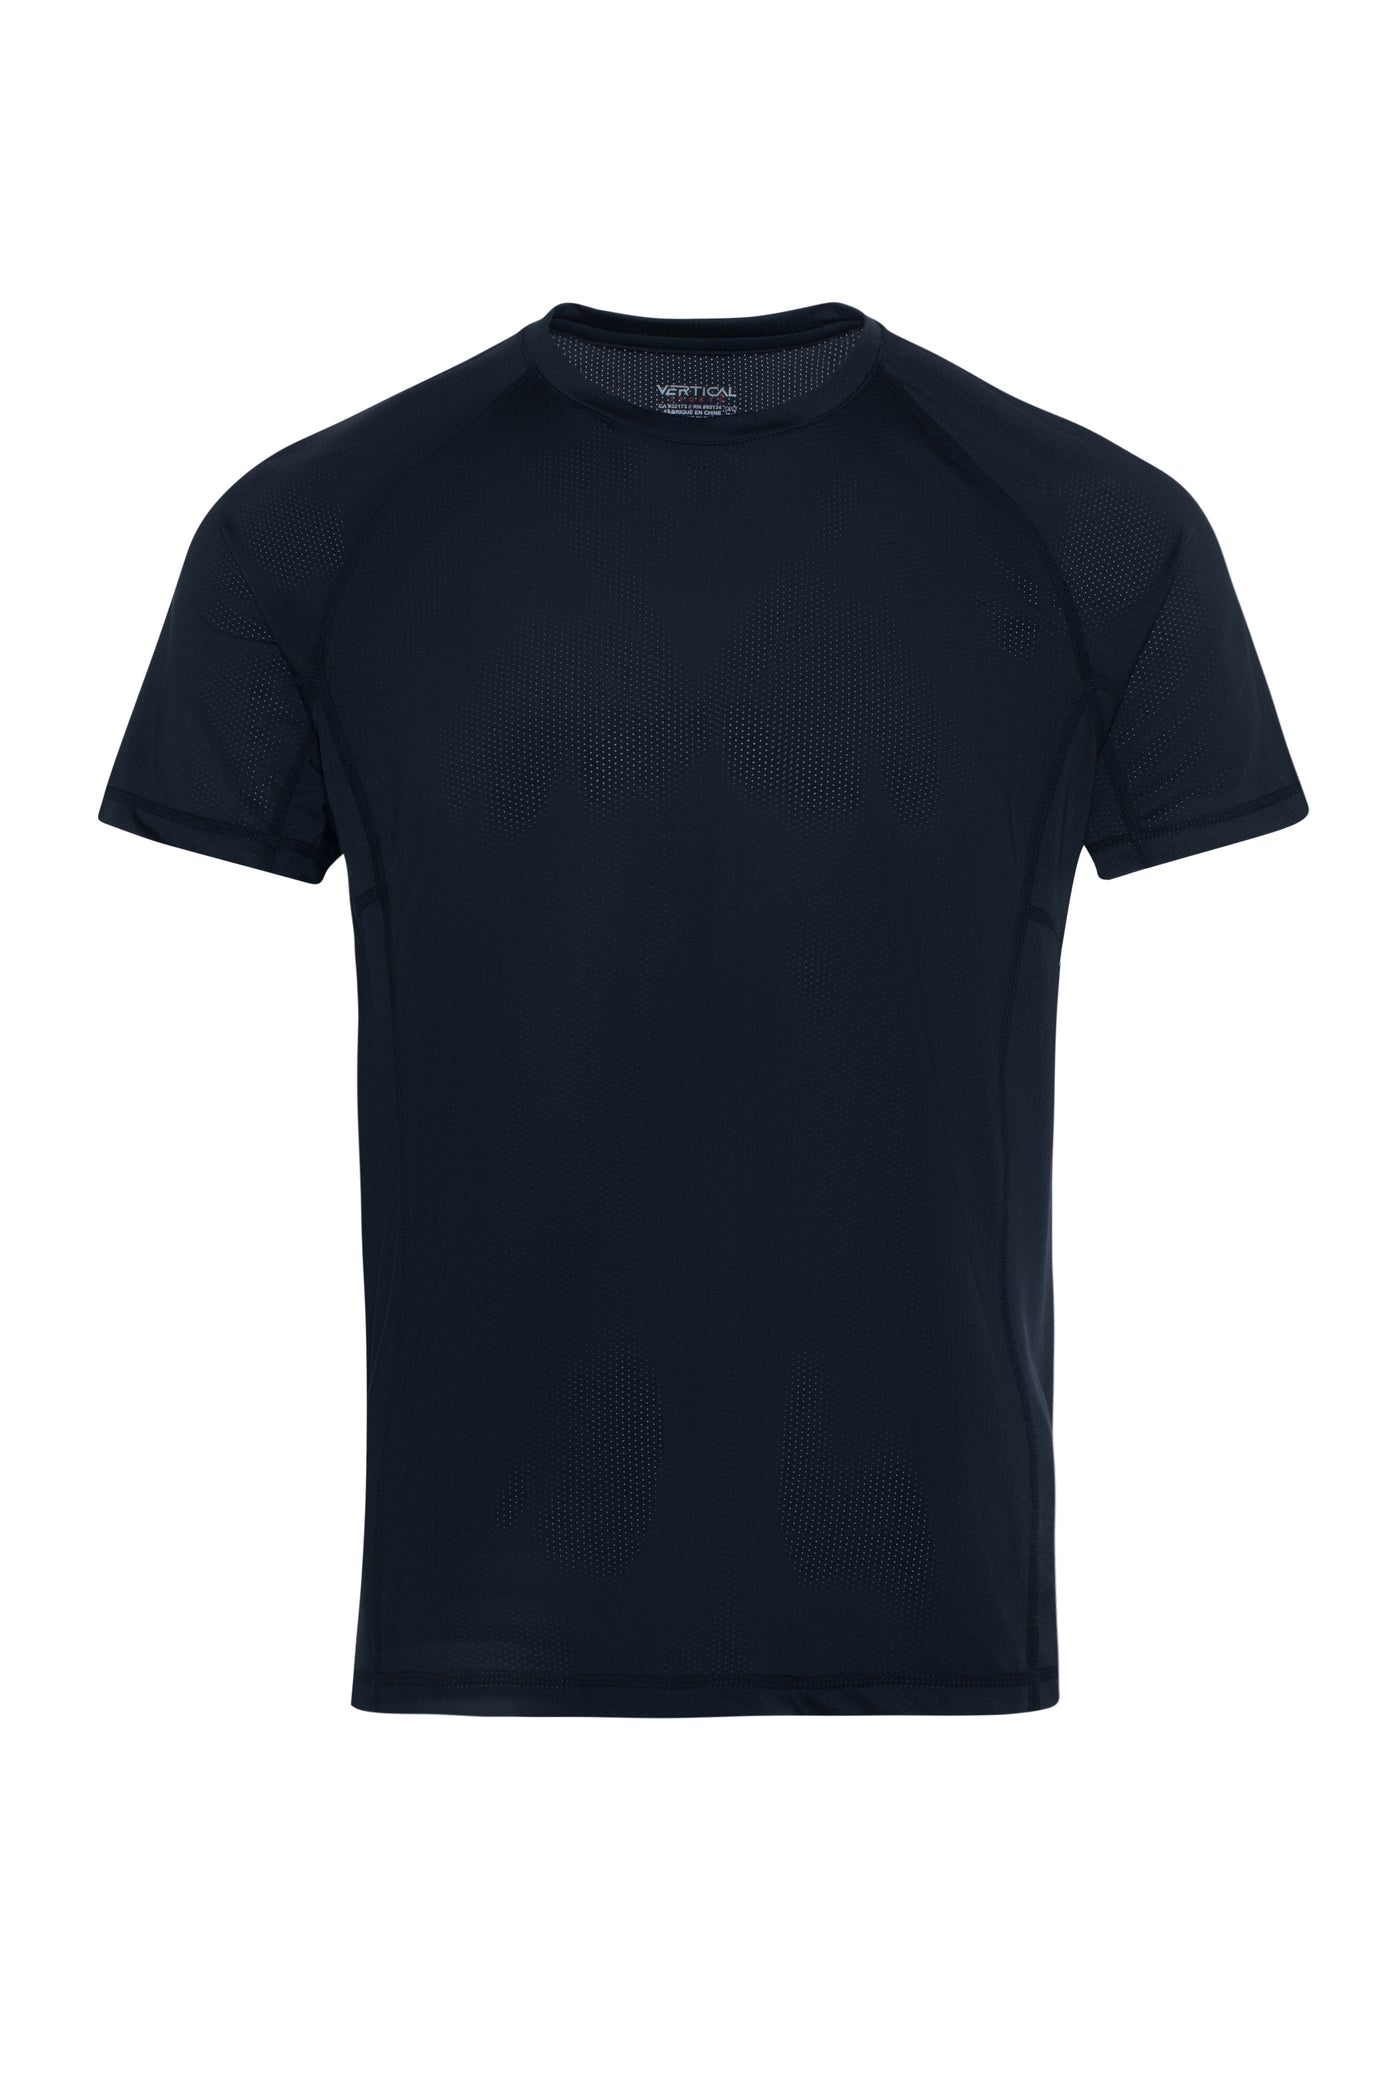 T-shirt Tenzing II - Homme - 50% de rabais